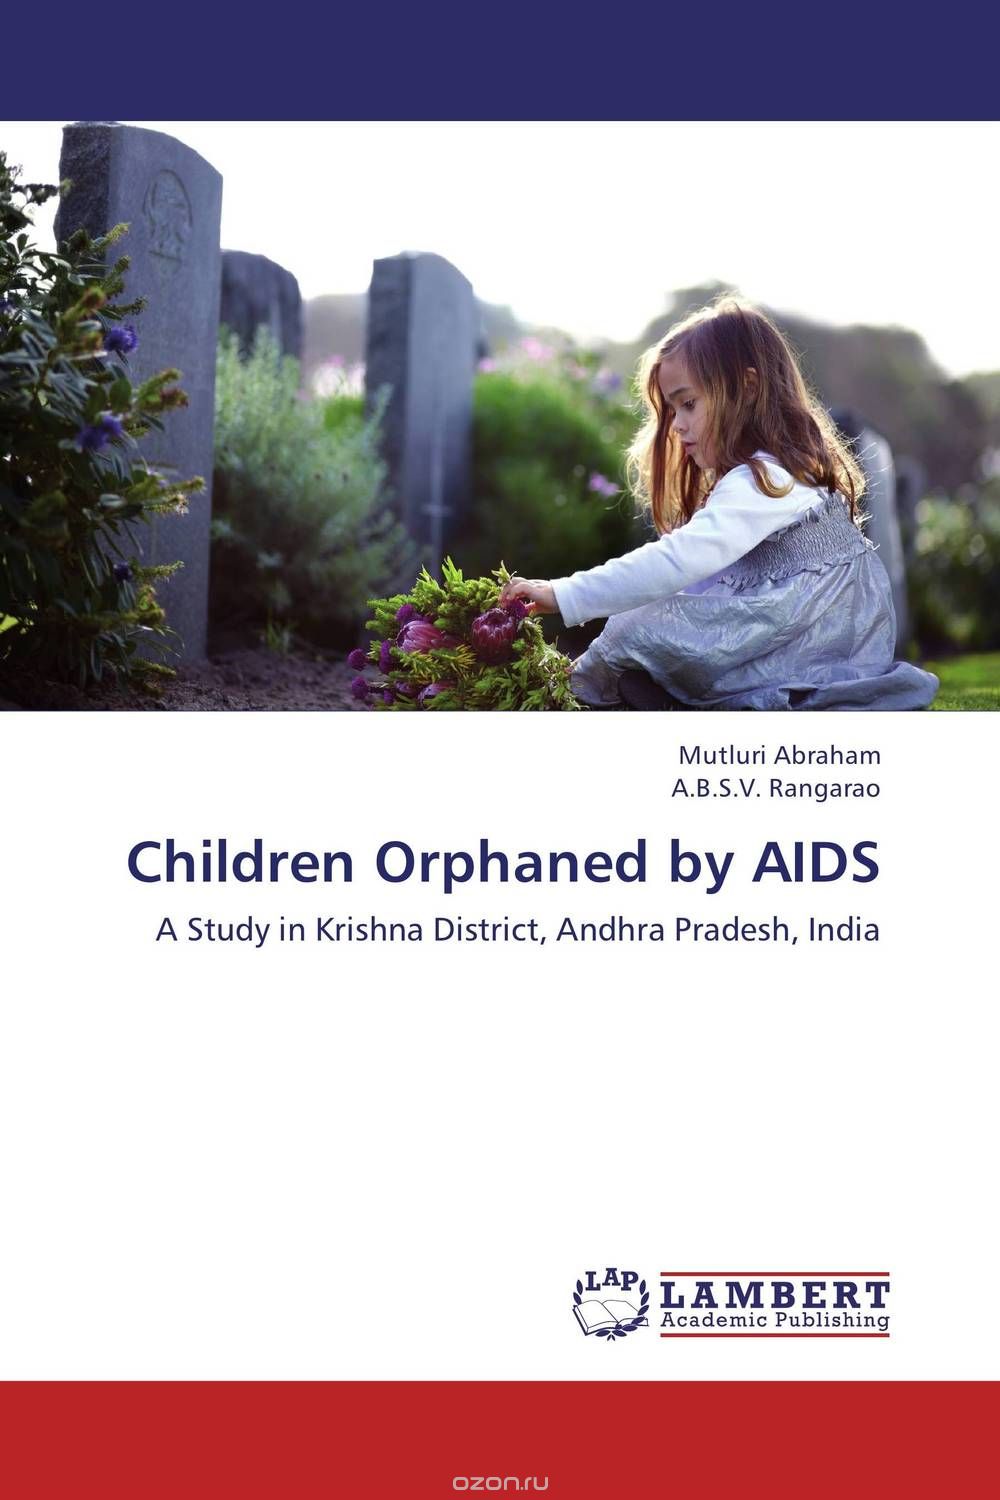 Скачать книгу "Children Orphaned by AIDS"